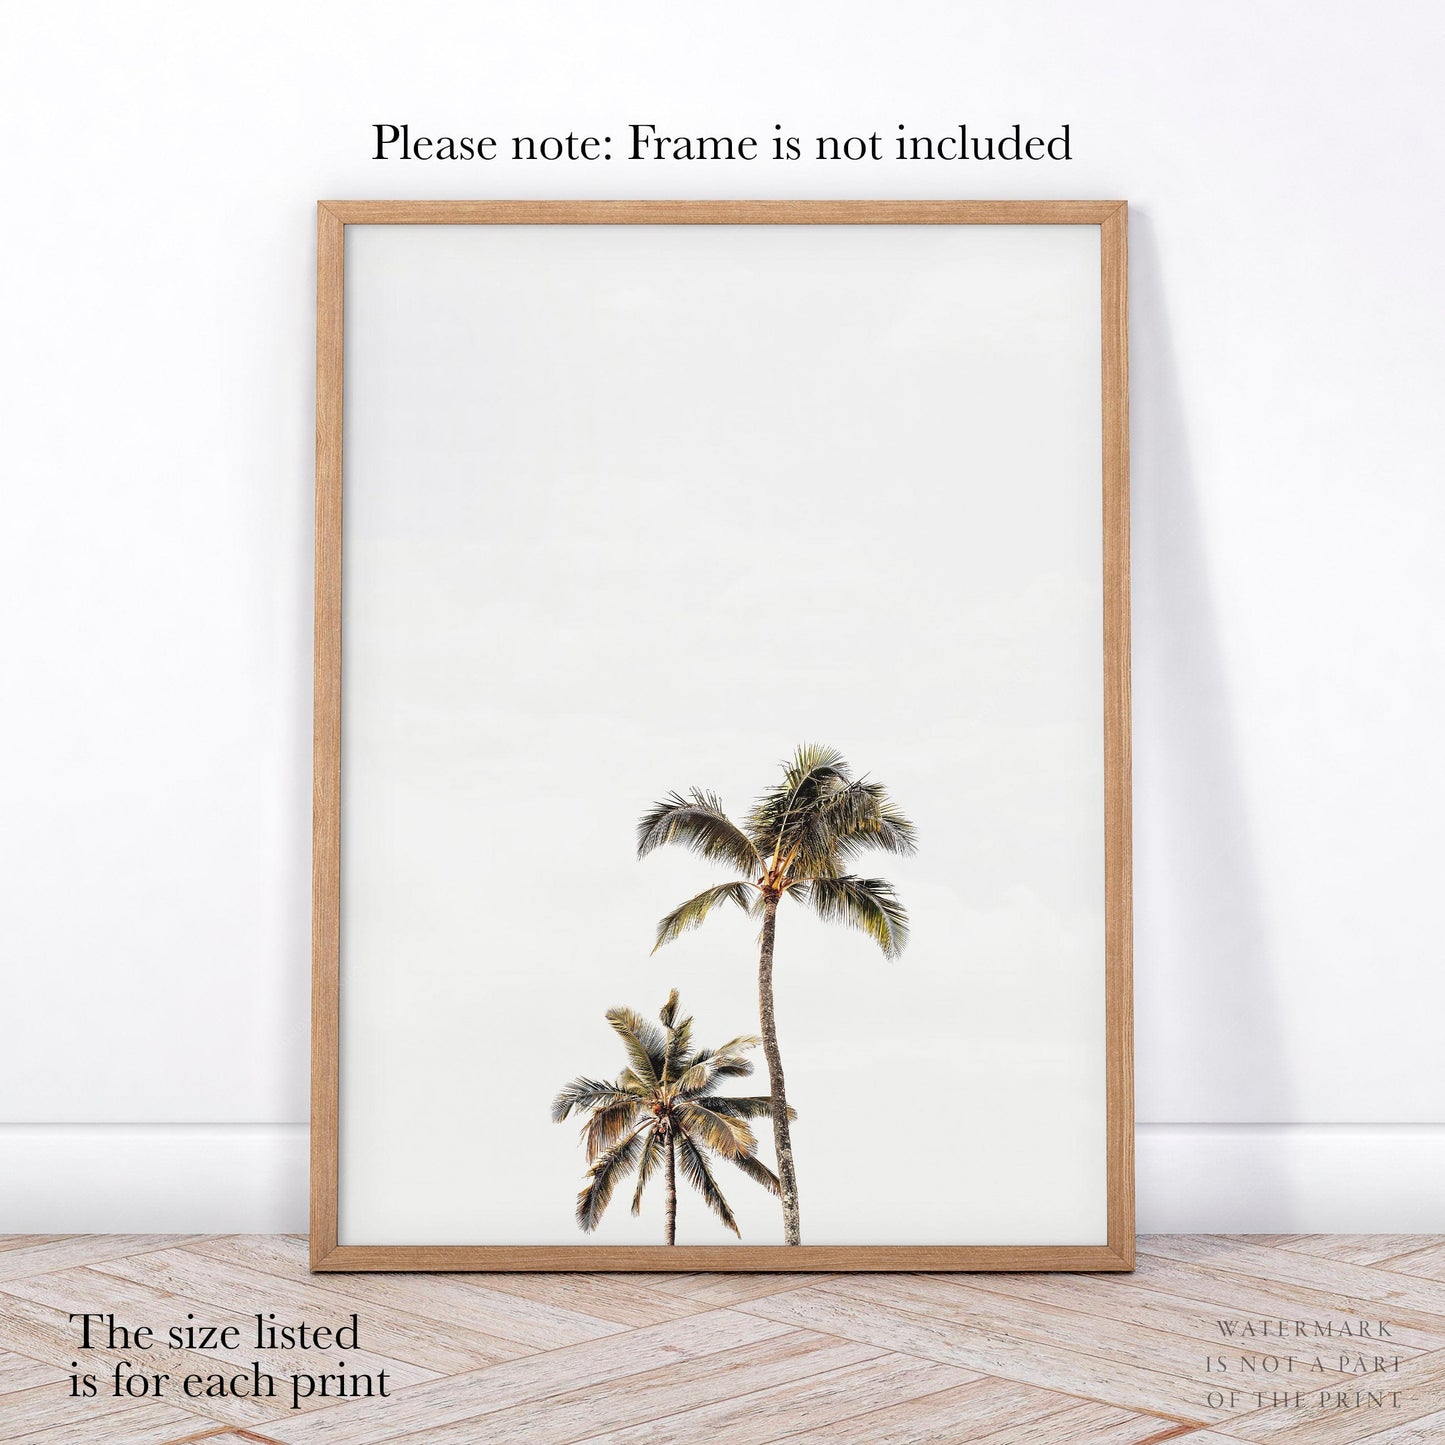 Home Poster Decor Set of 3 Beach Art Print, Set of 3 Beach Photo, California Wall Art Gallery, Boho Art Print, Surfboard Poster, Palm Tree, Sand Walking, Neutral Color